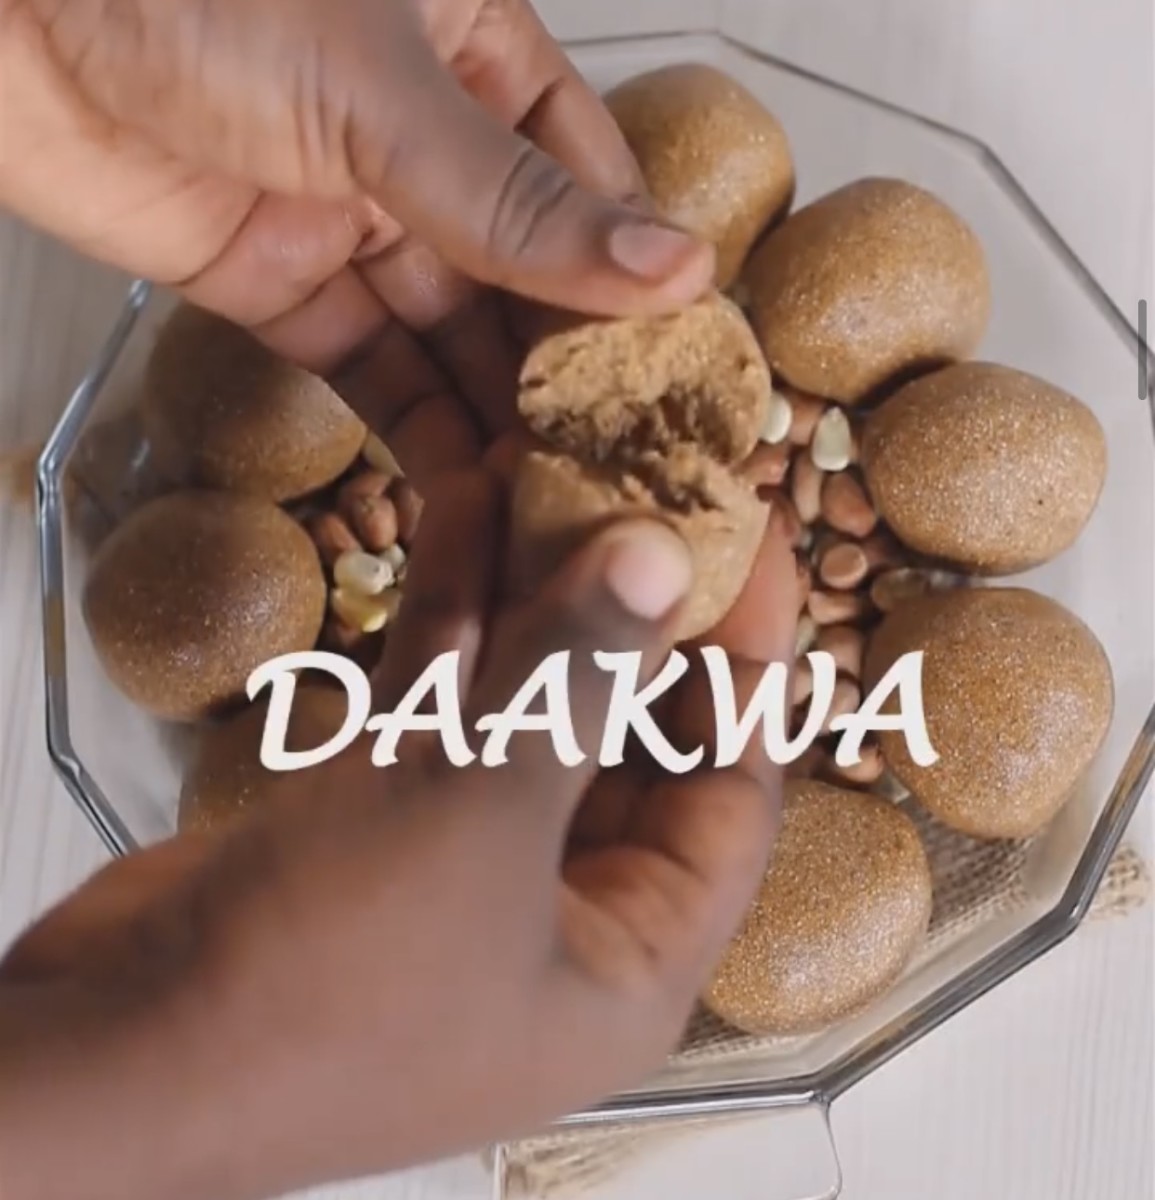 Daakwa is for peanut lovers.